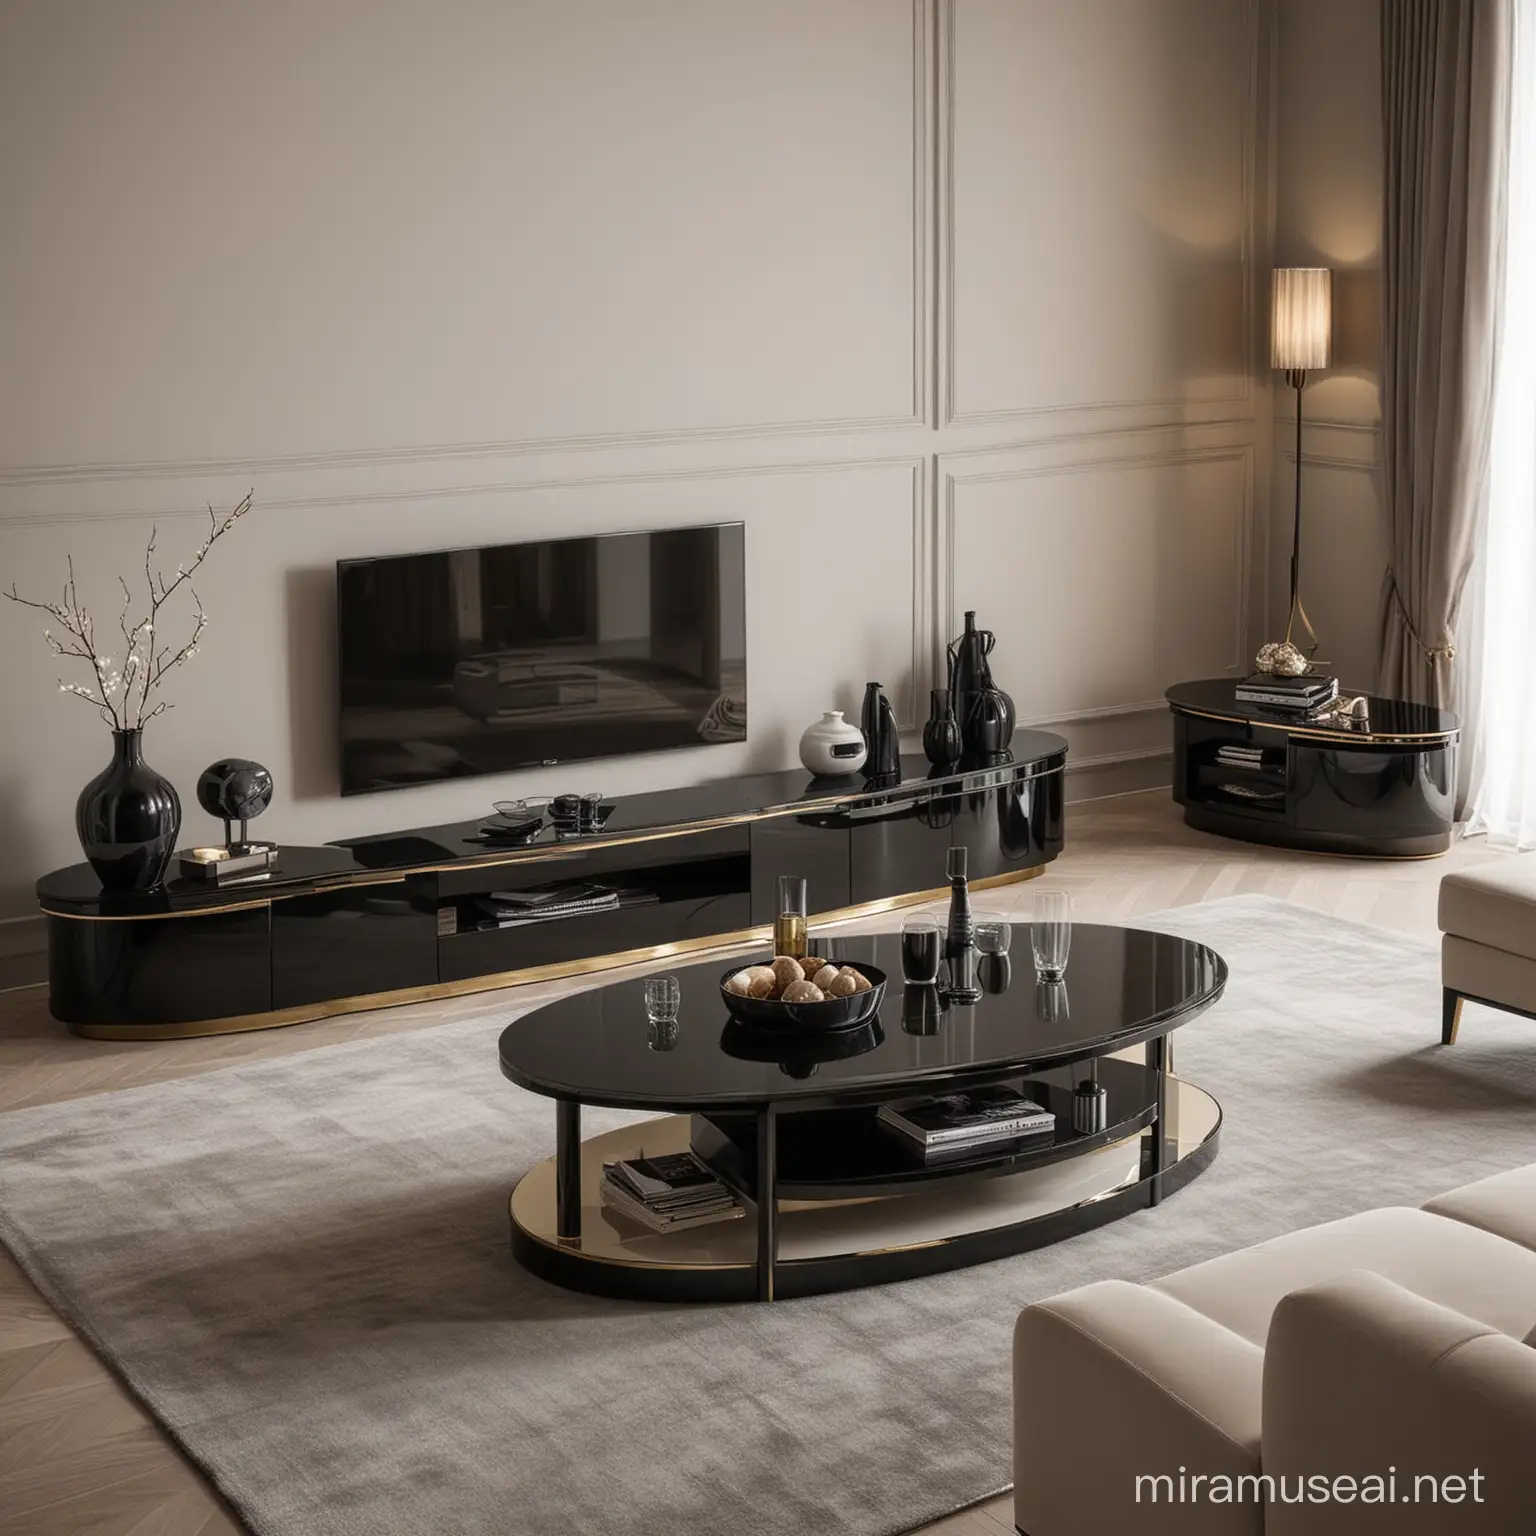 Luxury Oval Living Room Set with Modern Black Furniture Design